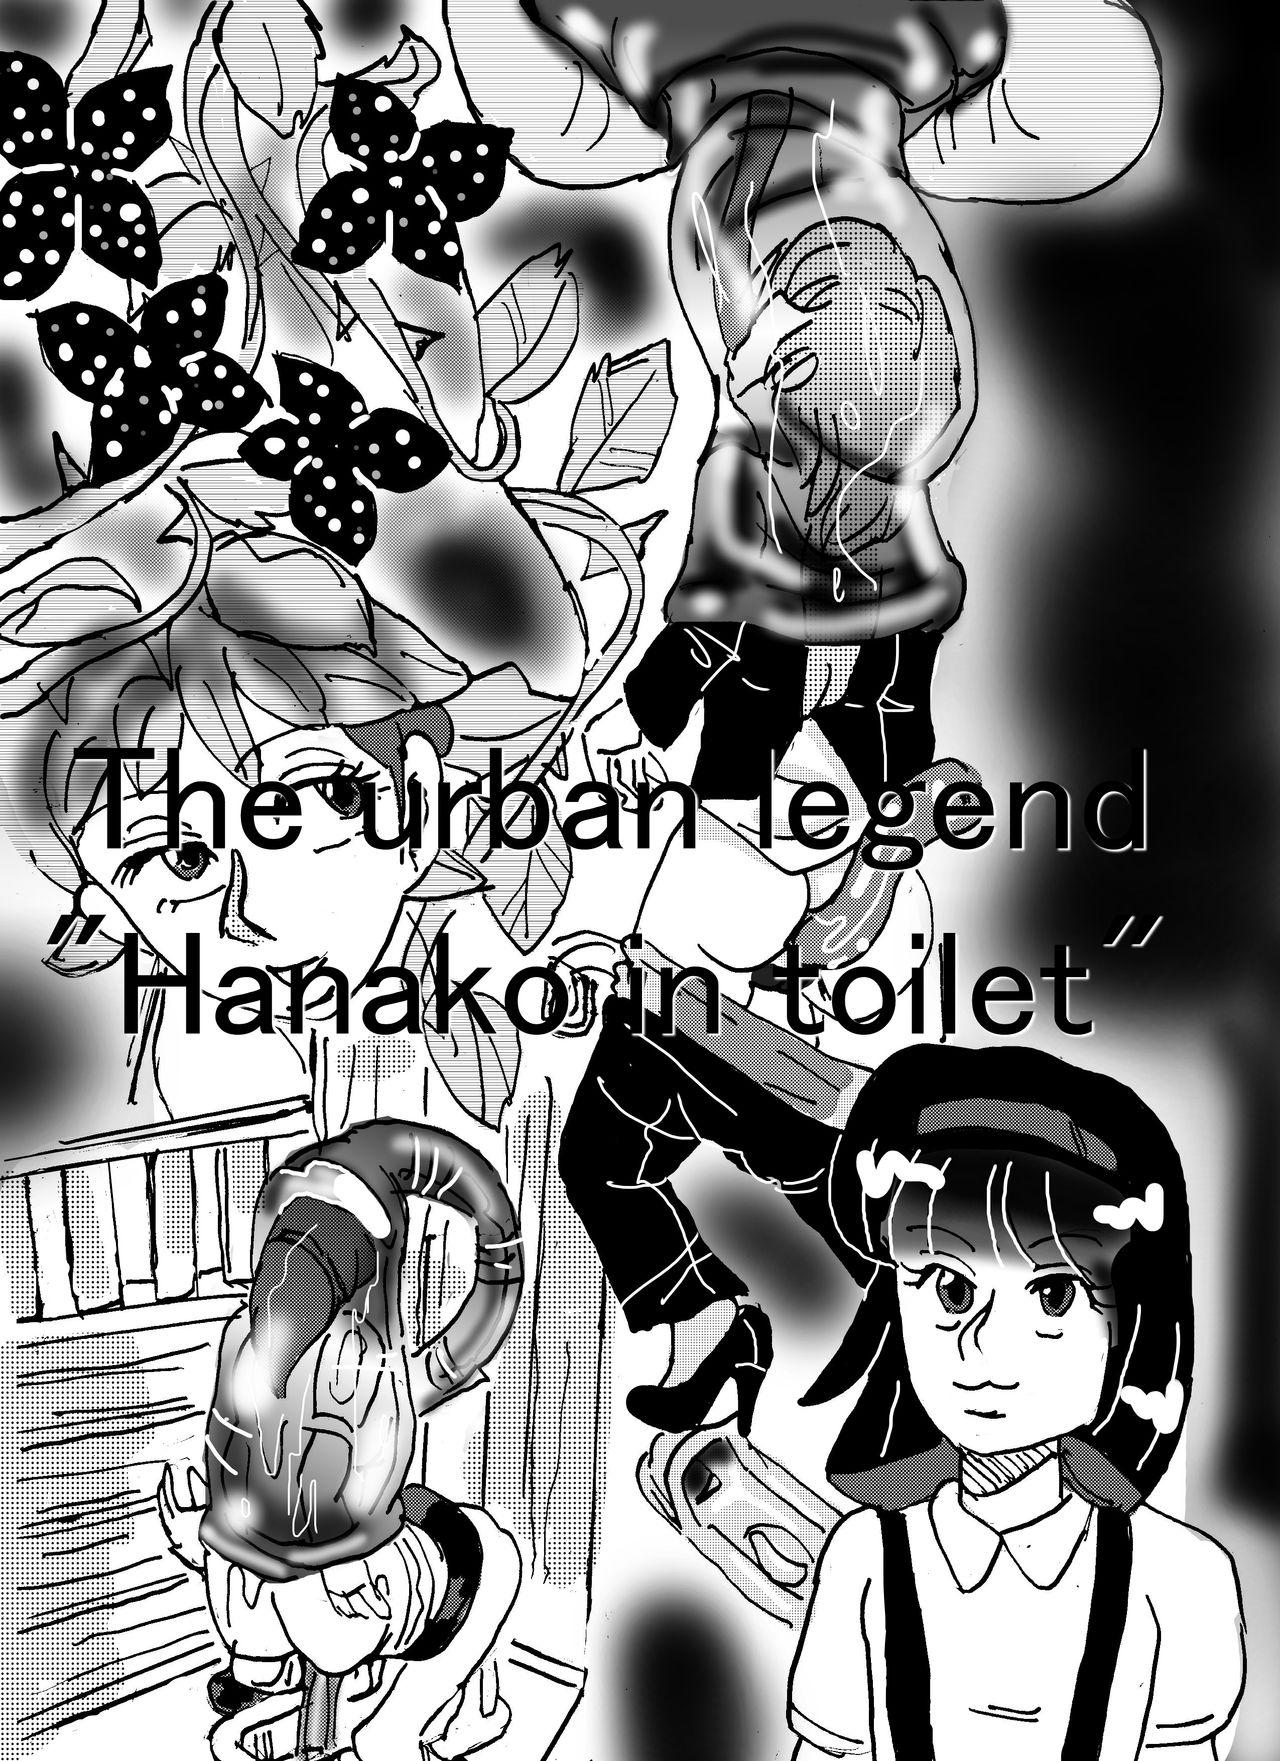 Perfect Teen Urban legend "Ha*ako in toilet" - Original Russian - Page 1